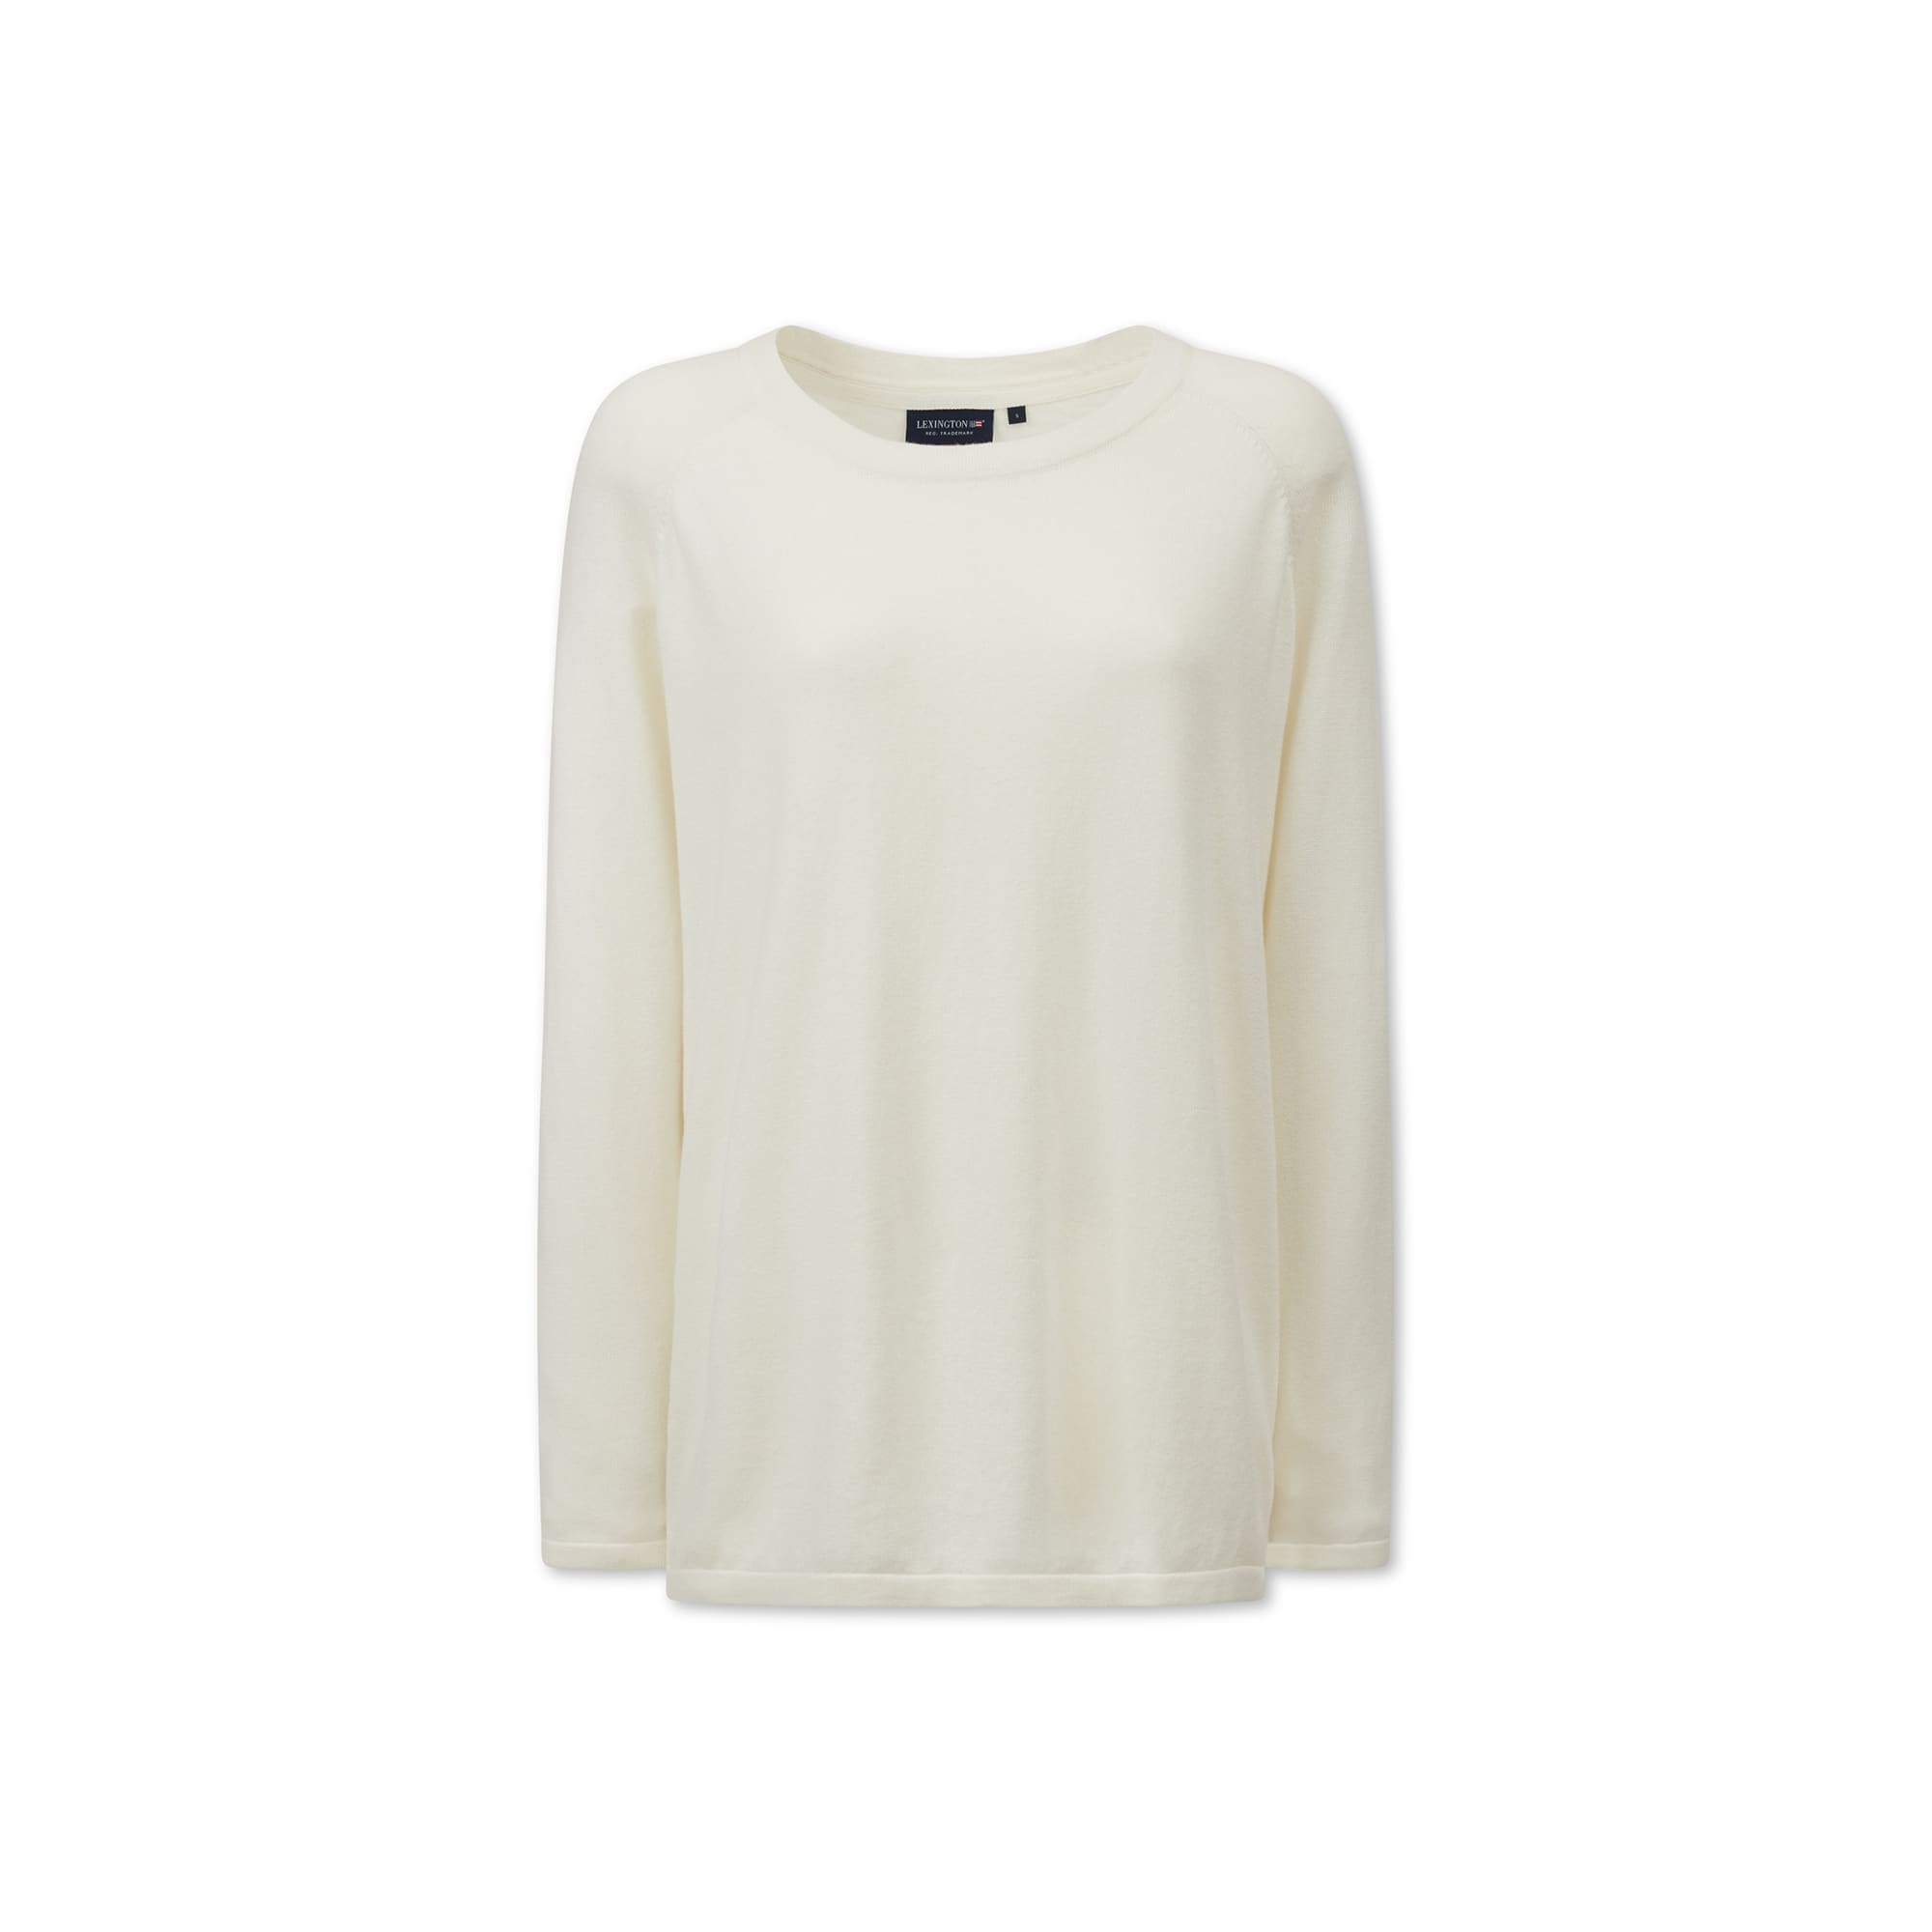 Lea Organic Cotton/cashmere Sweater, coral pink